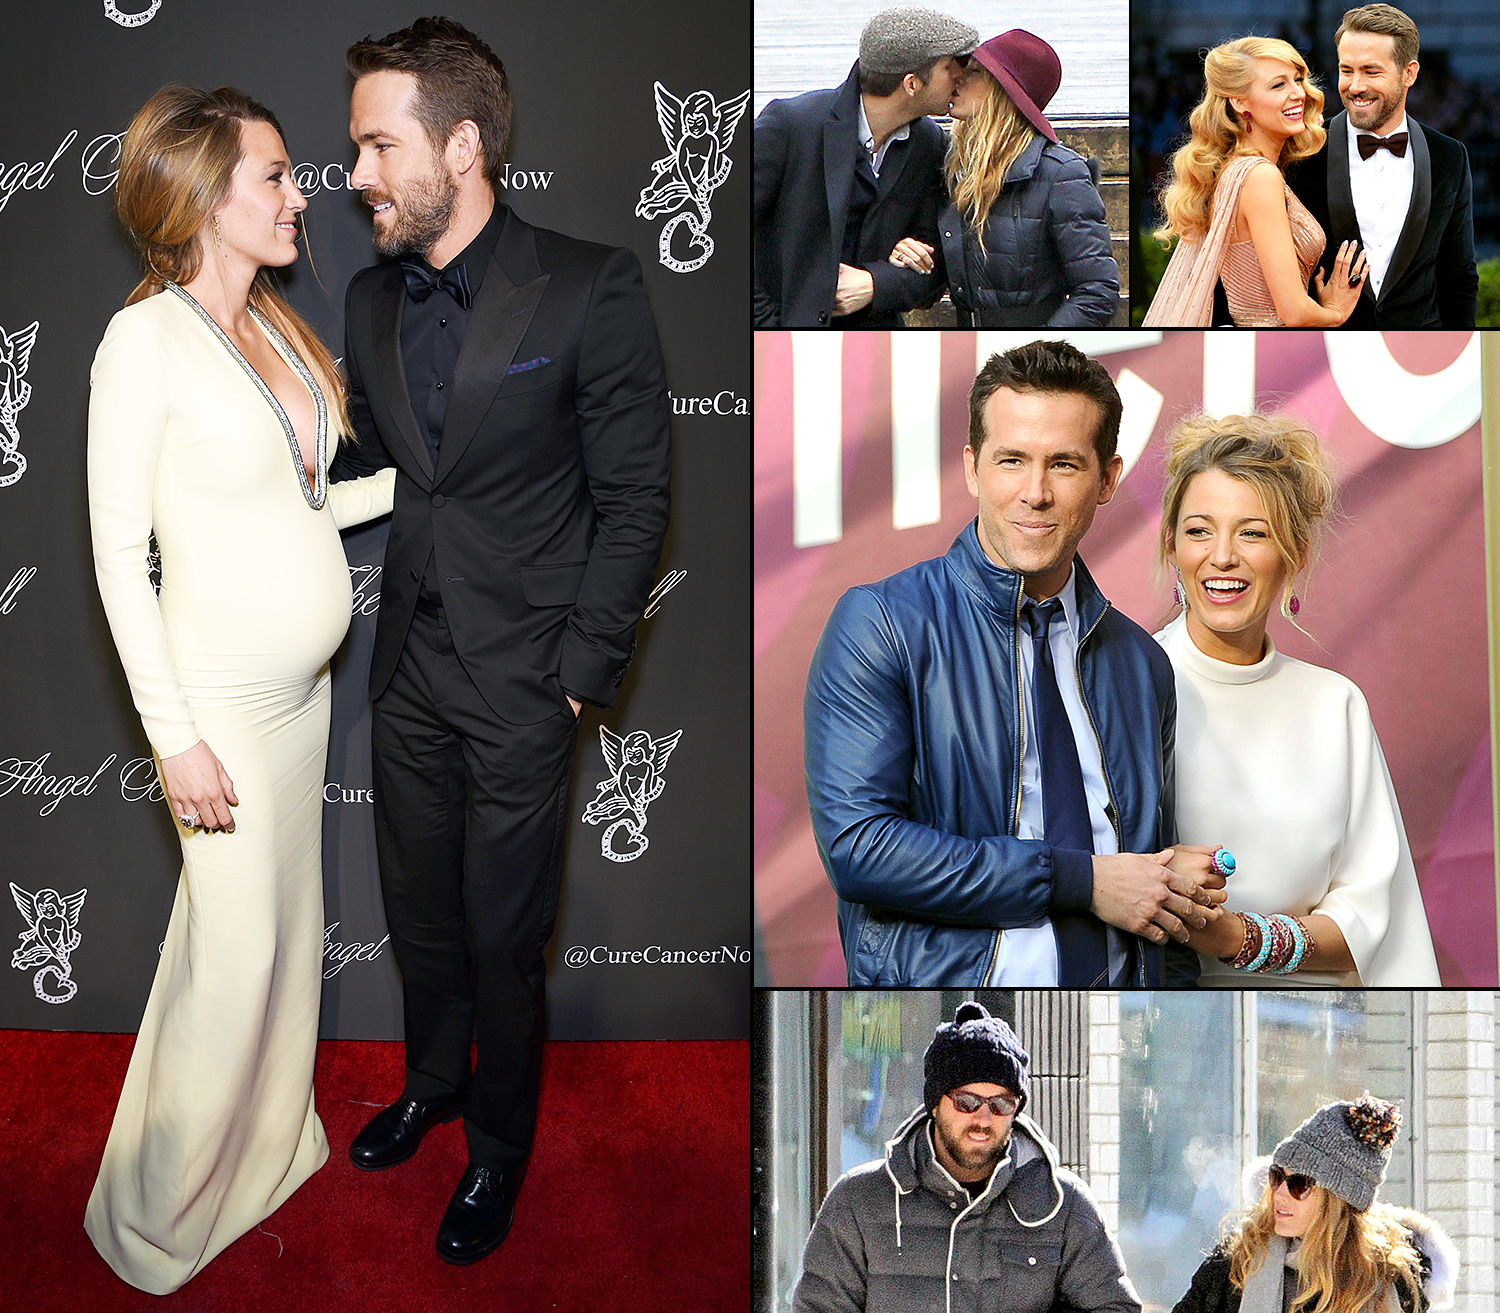 Blake Lively and Ryan Reynolds Relationship Timeline + Photos